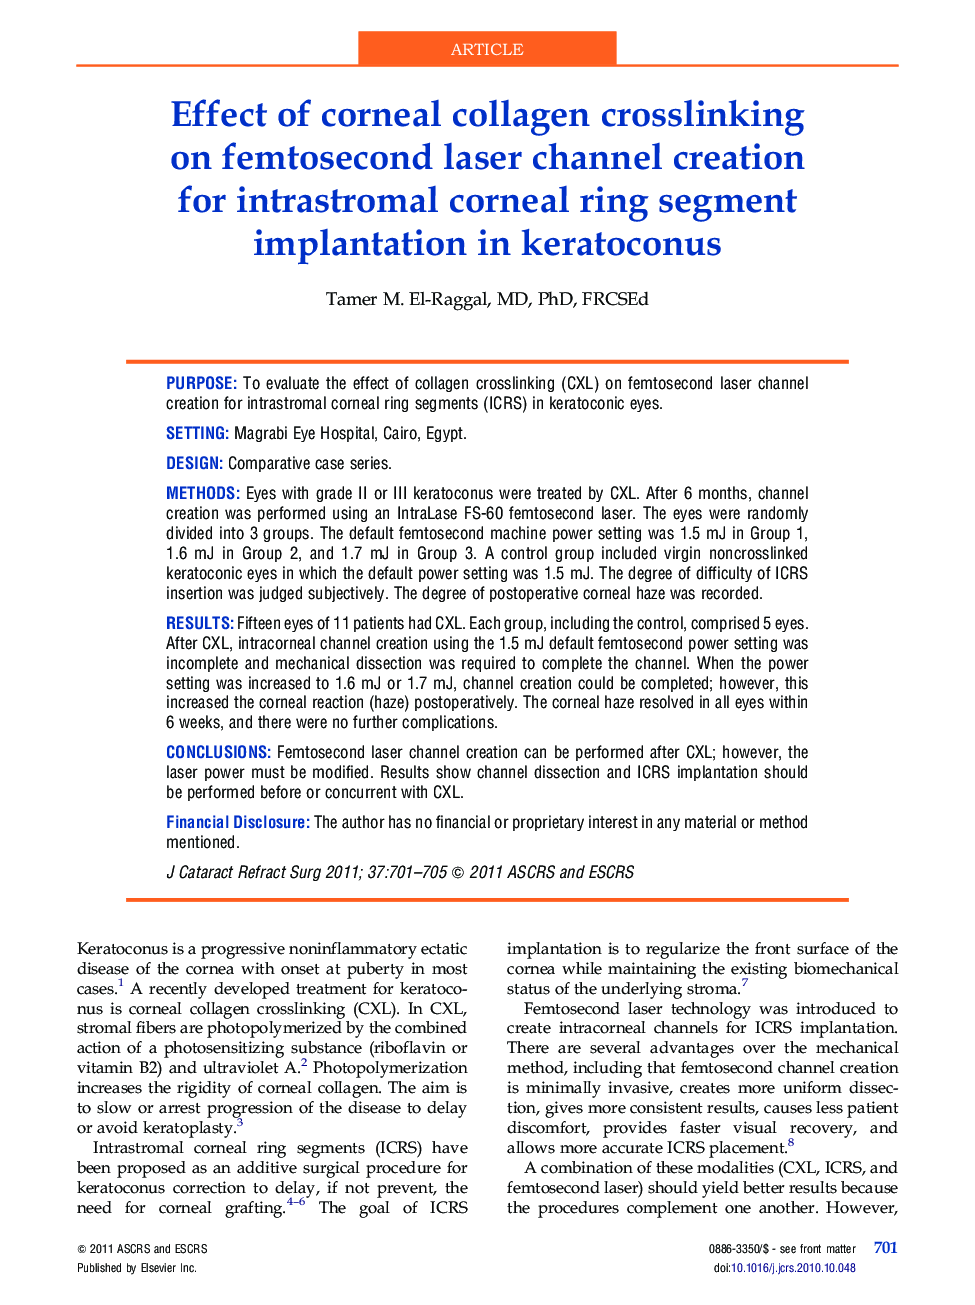 Effect of corneal collagen crosslinking on femtosecond laser channel creation for intrastromal corneal ring segment implantation in keratoconus